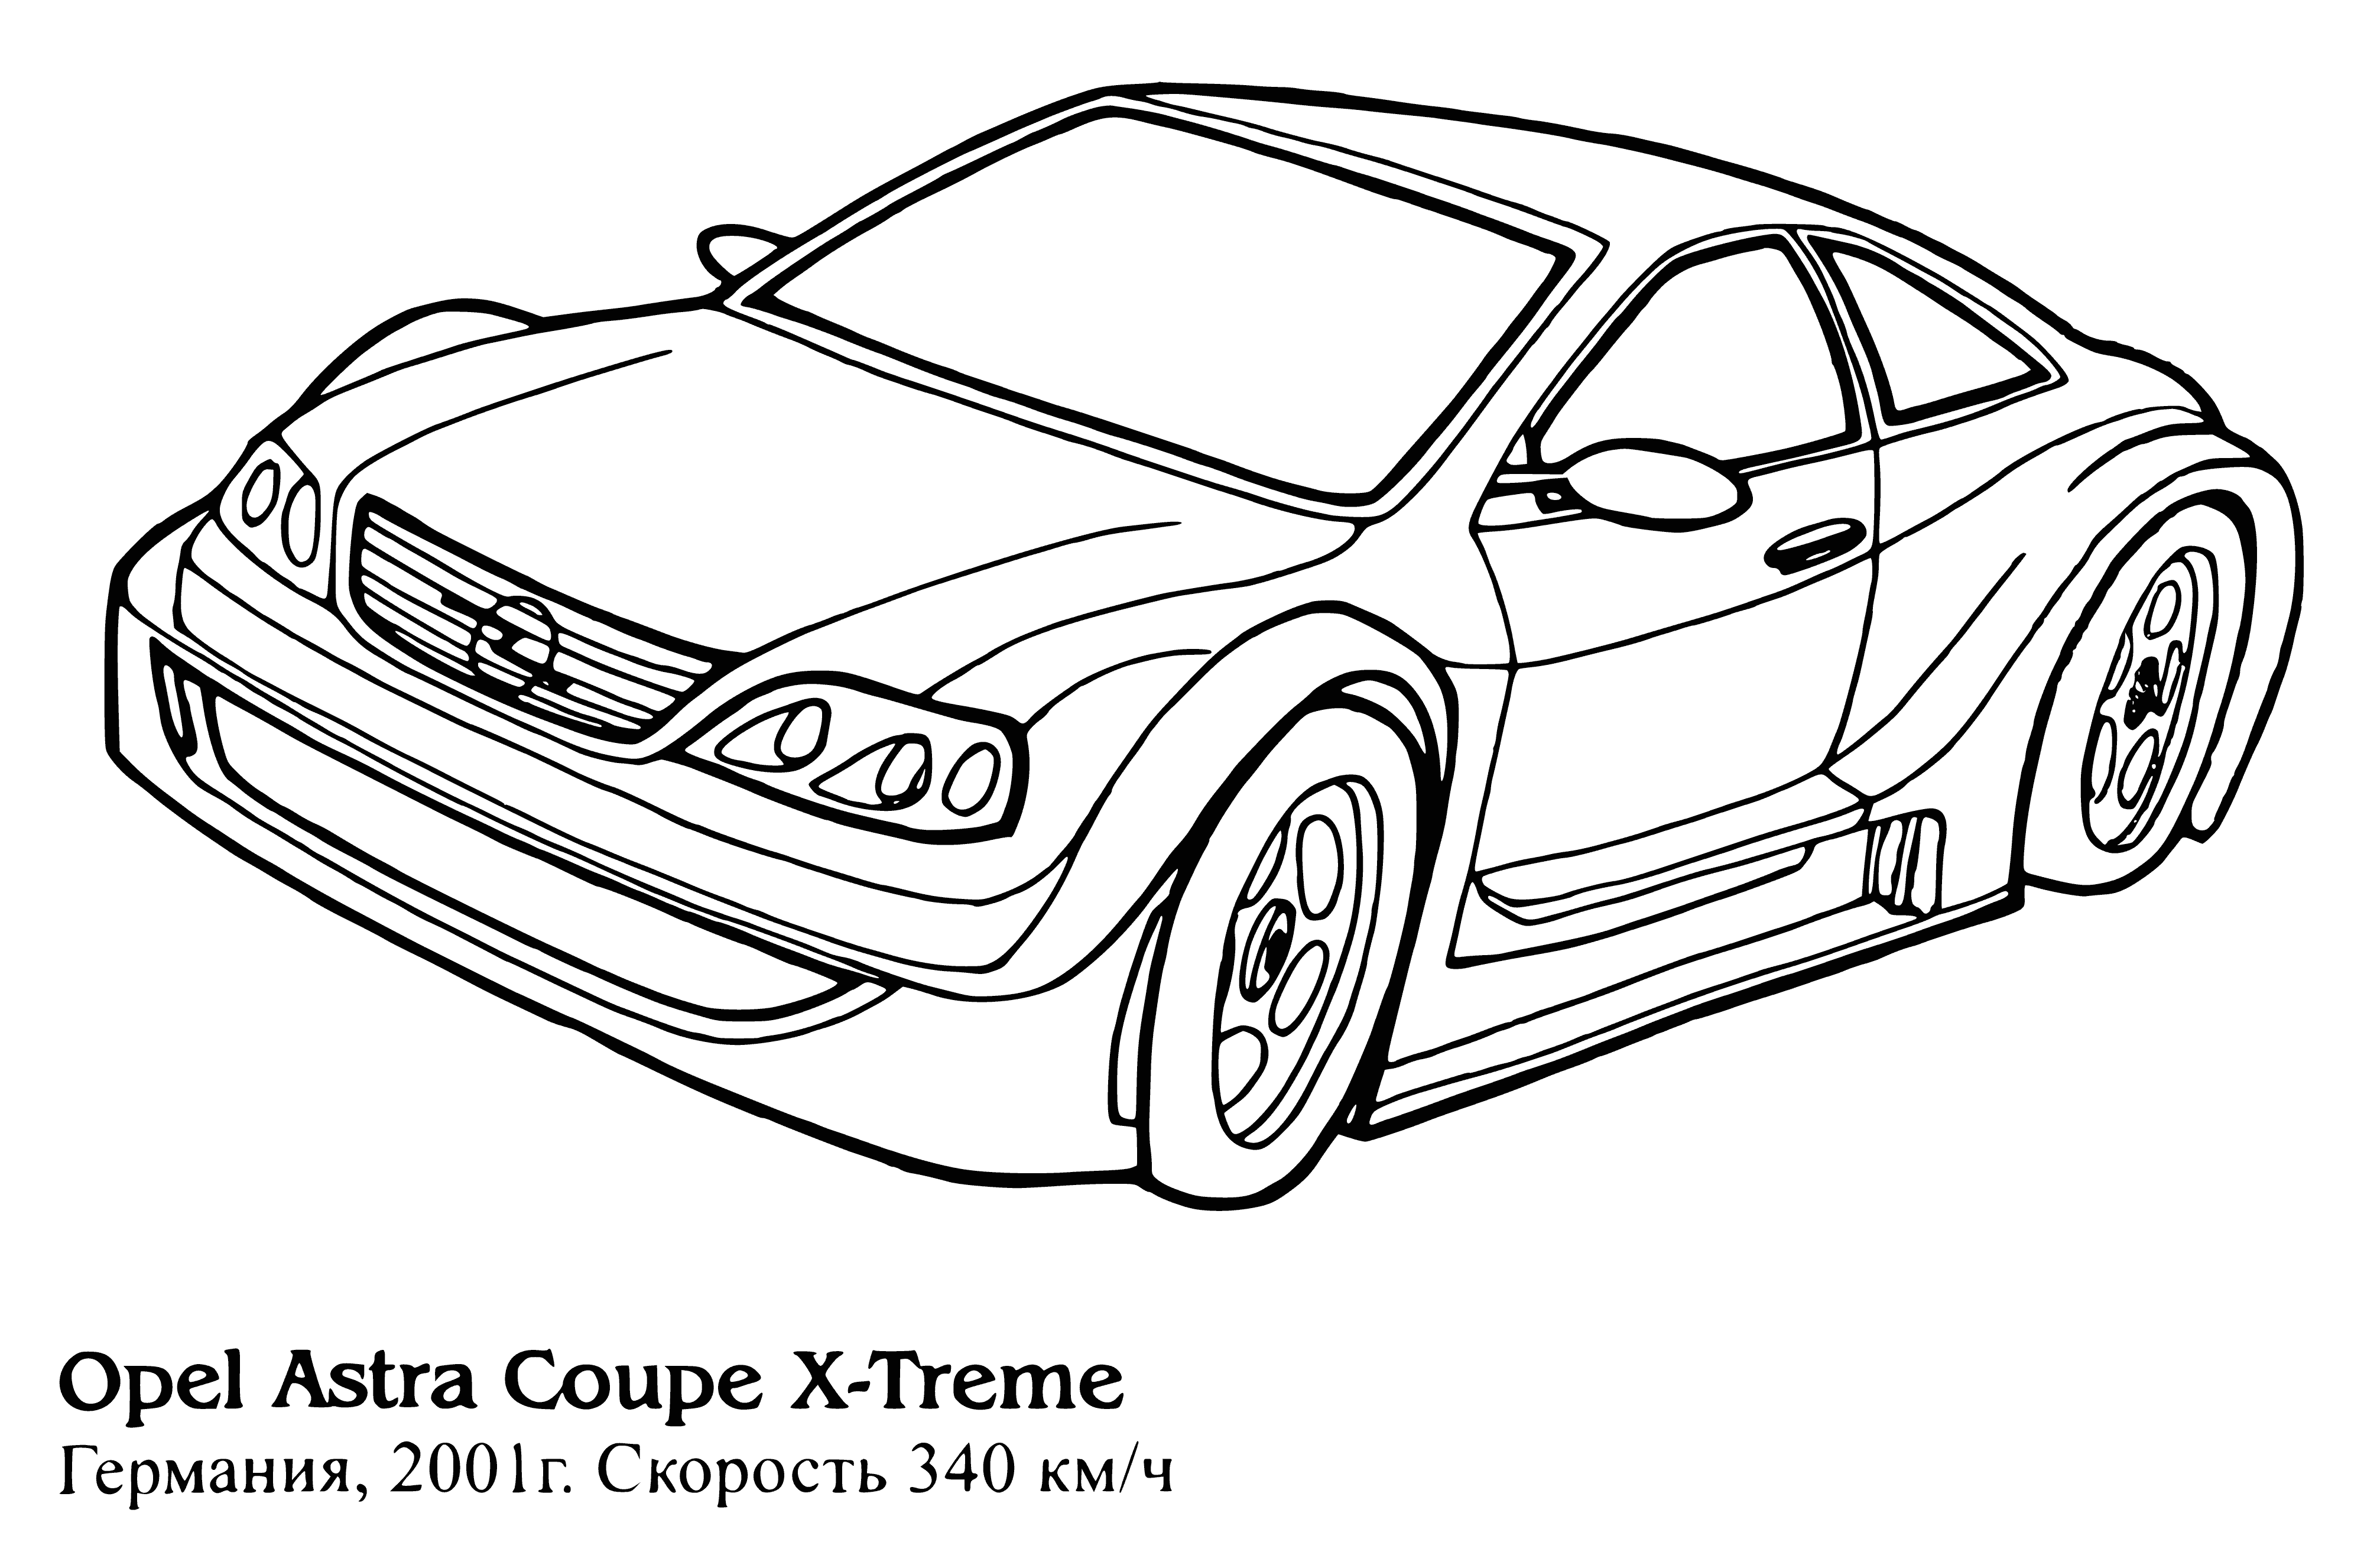 Opel Astra Coupe X-Treme boyama sayfası